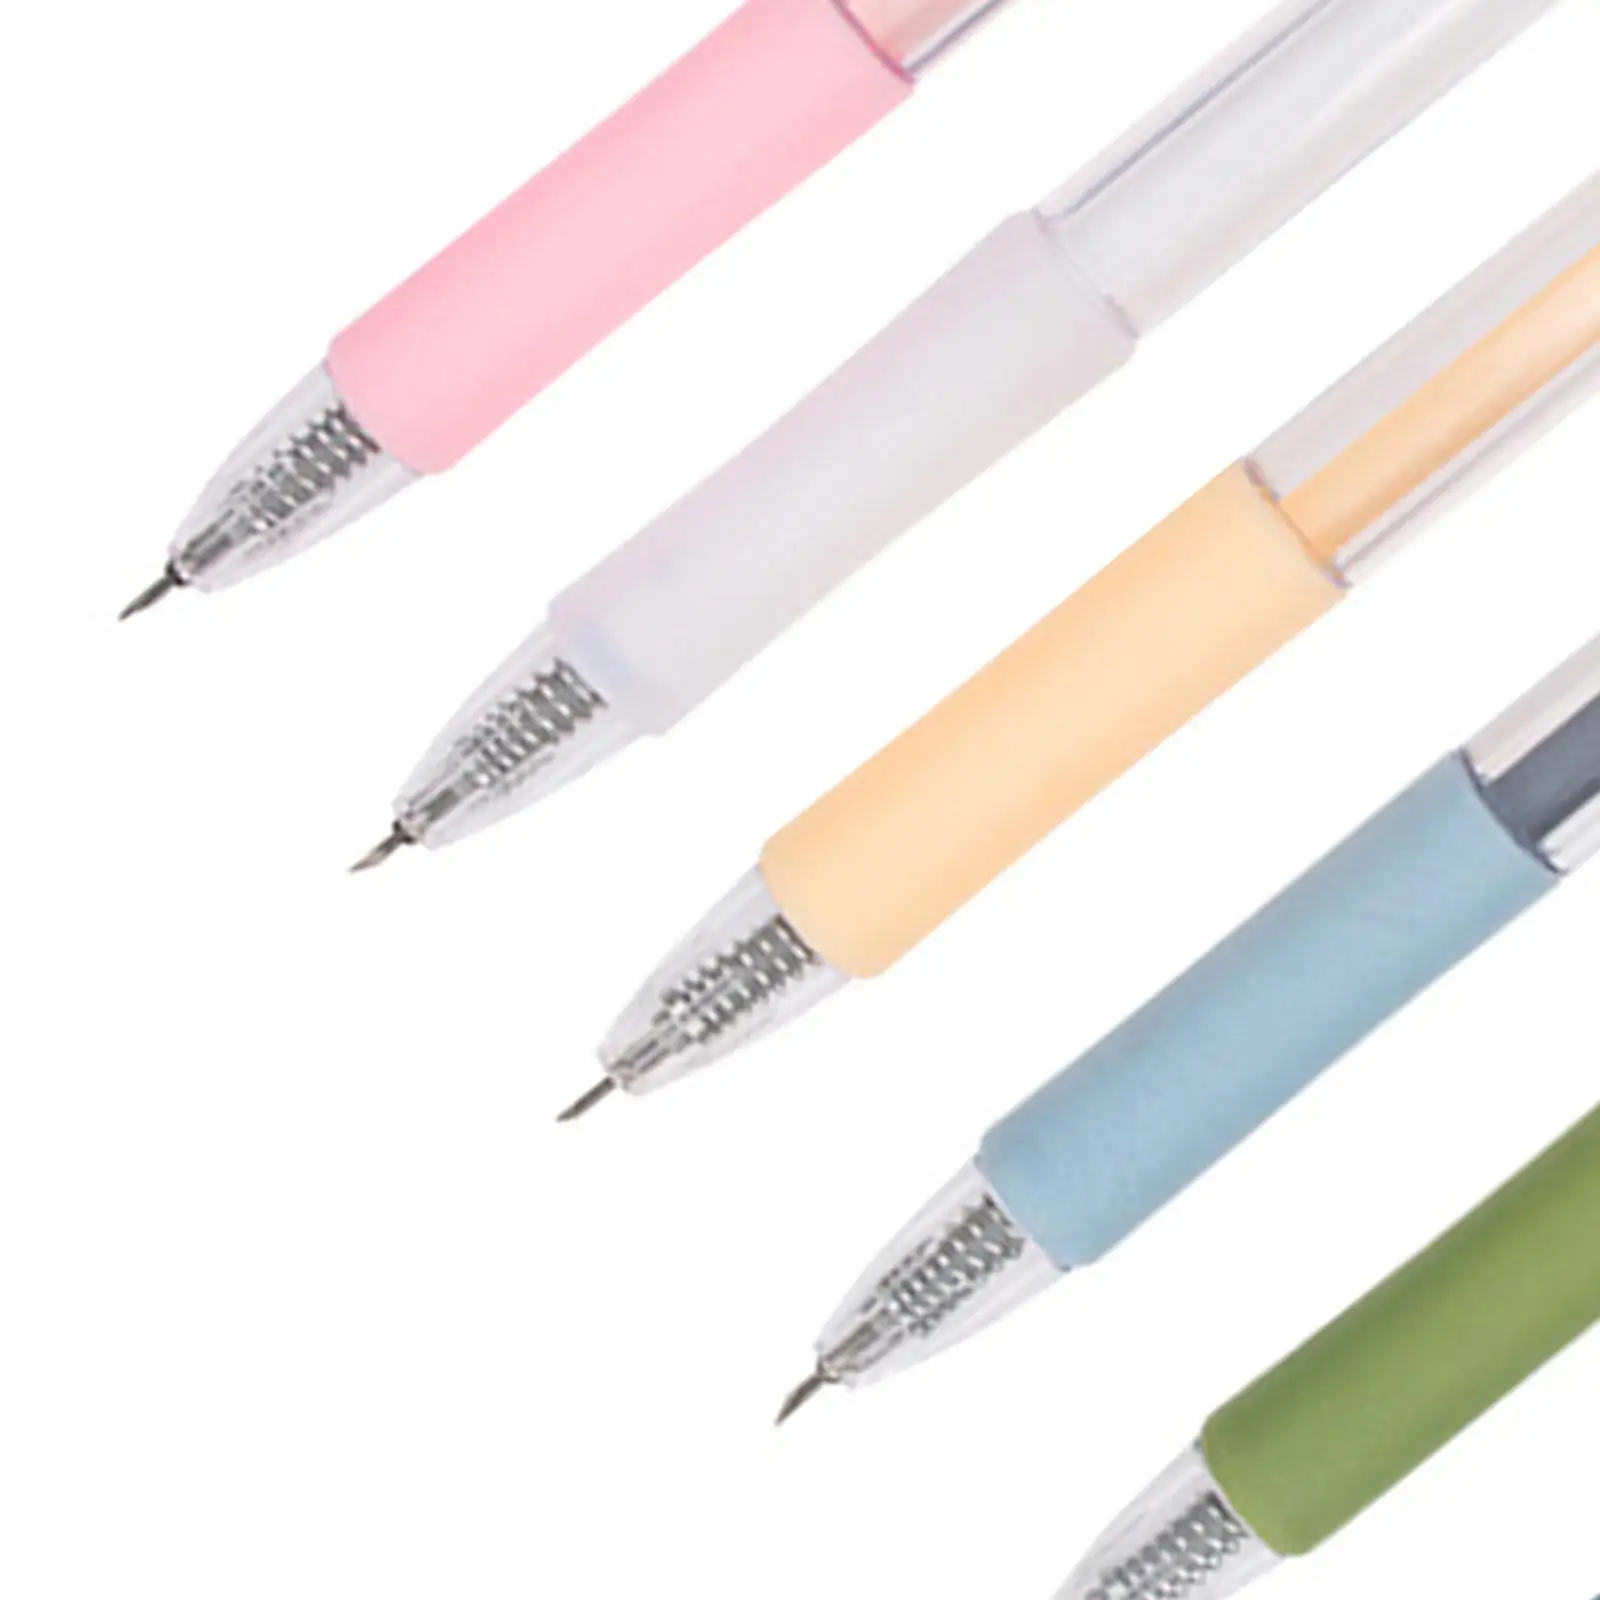 6 Pieces Paper Cutter Pen Craft Cutting Tool Utility Knife for Art Paper Scrapbook